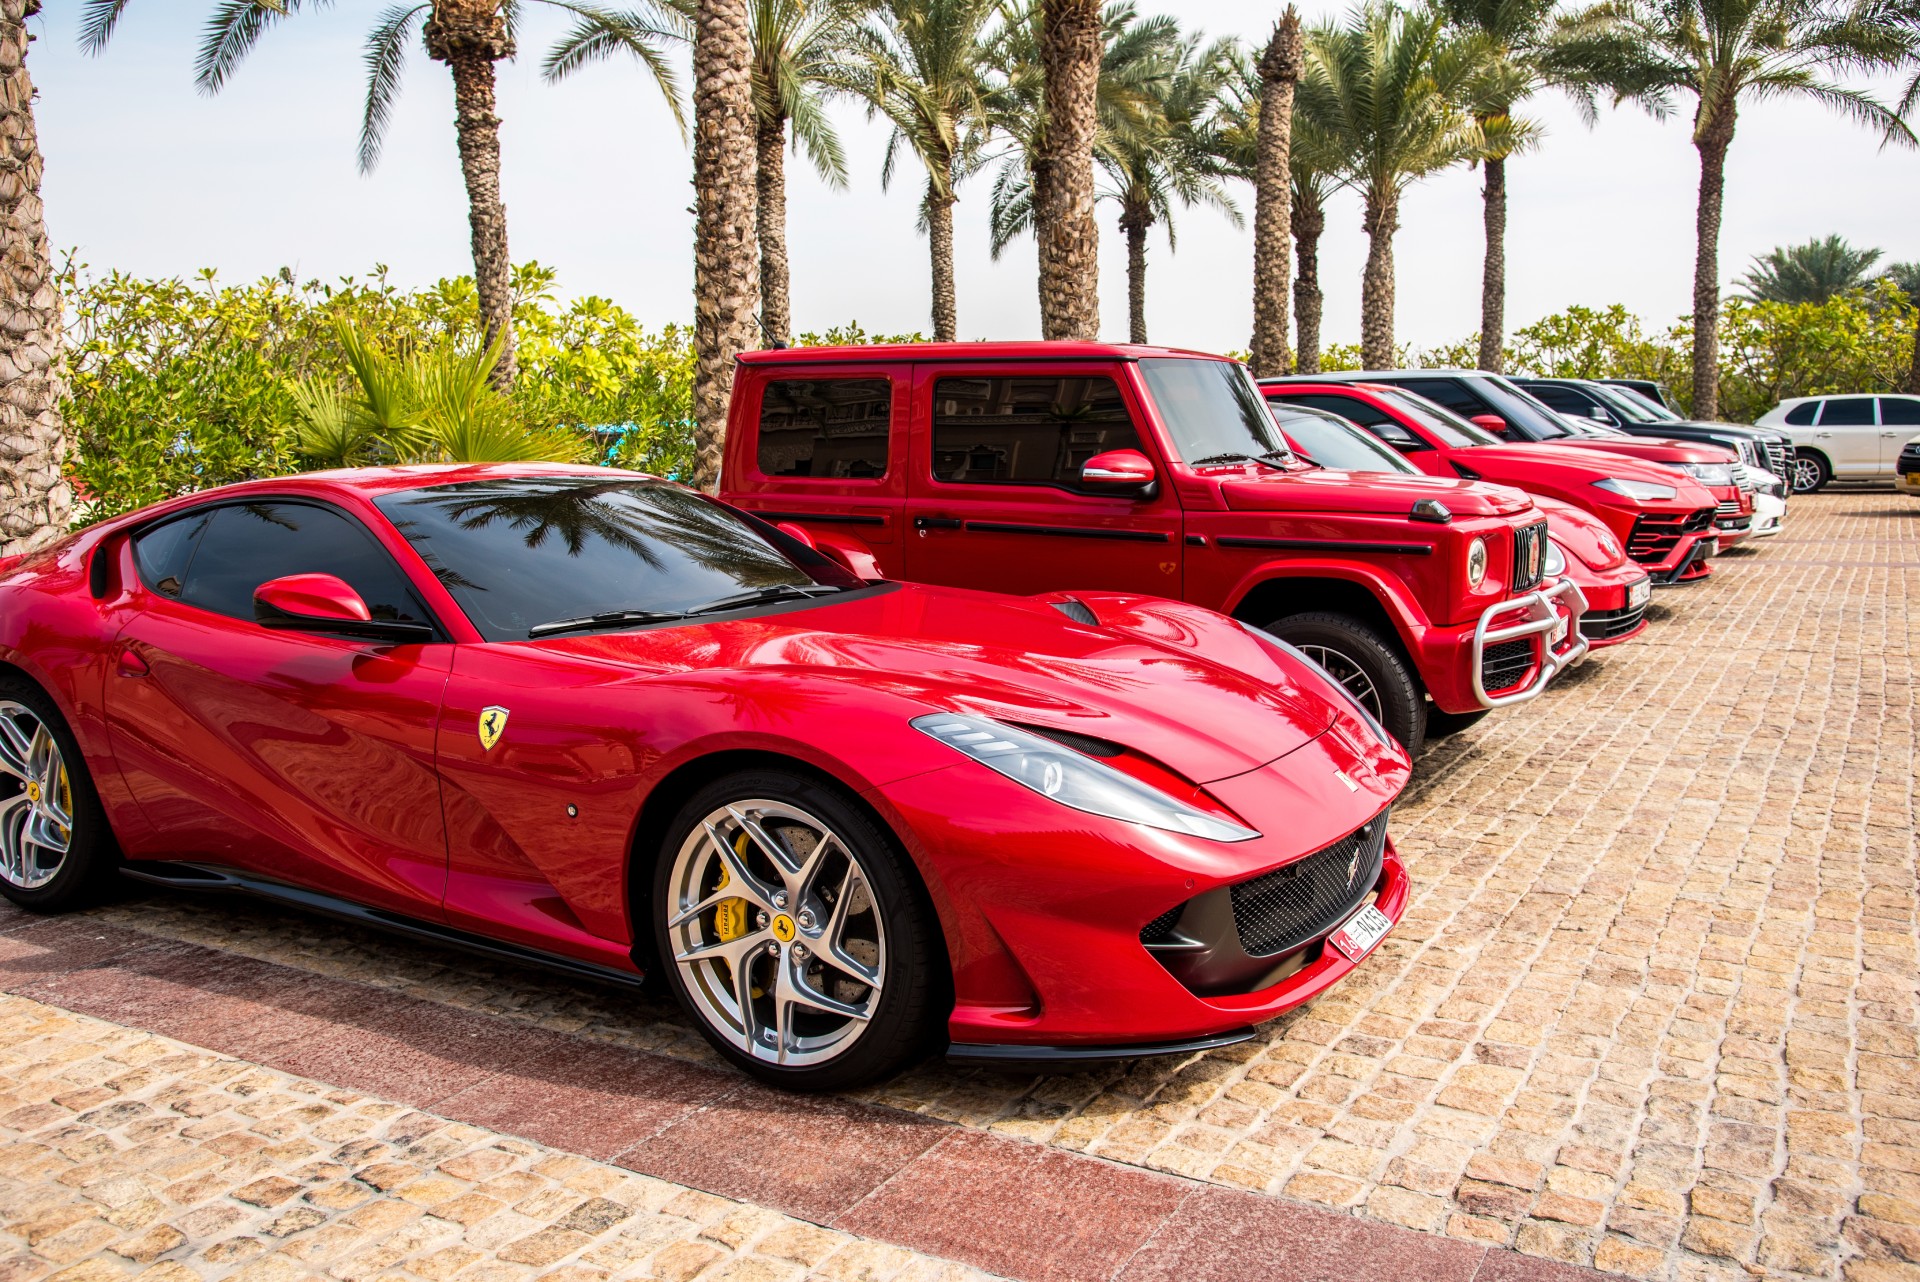 Top 10 populairste auto's in Dubai